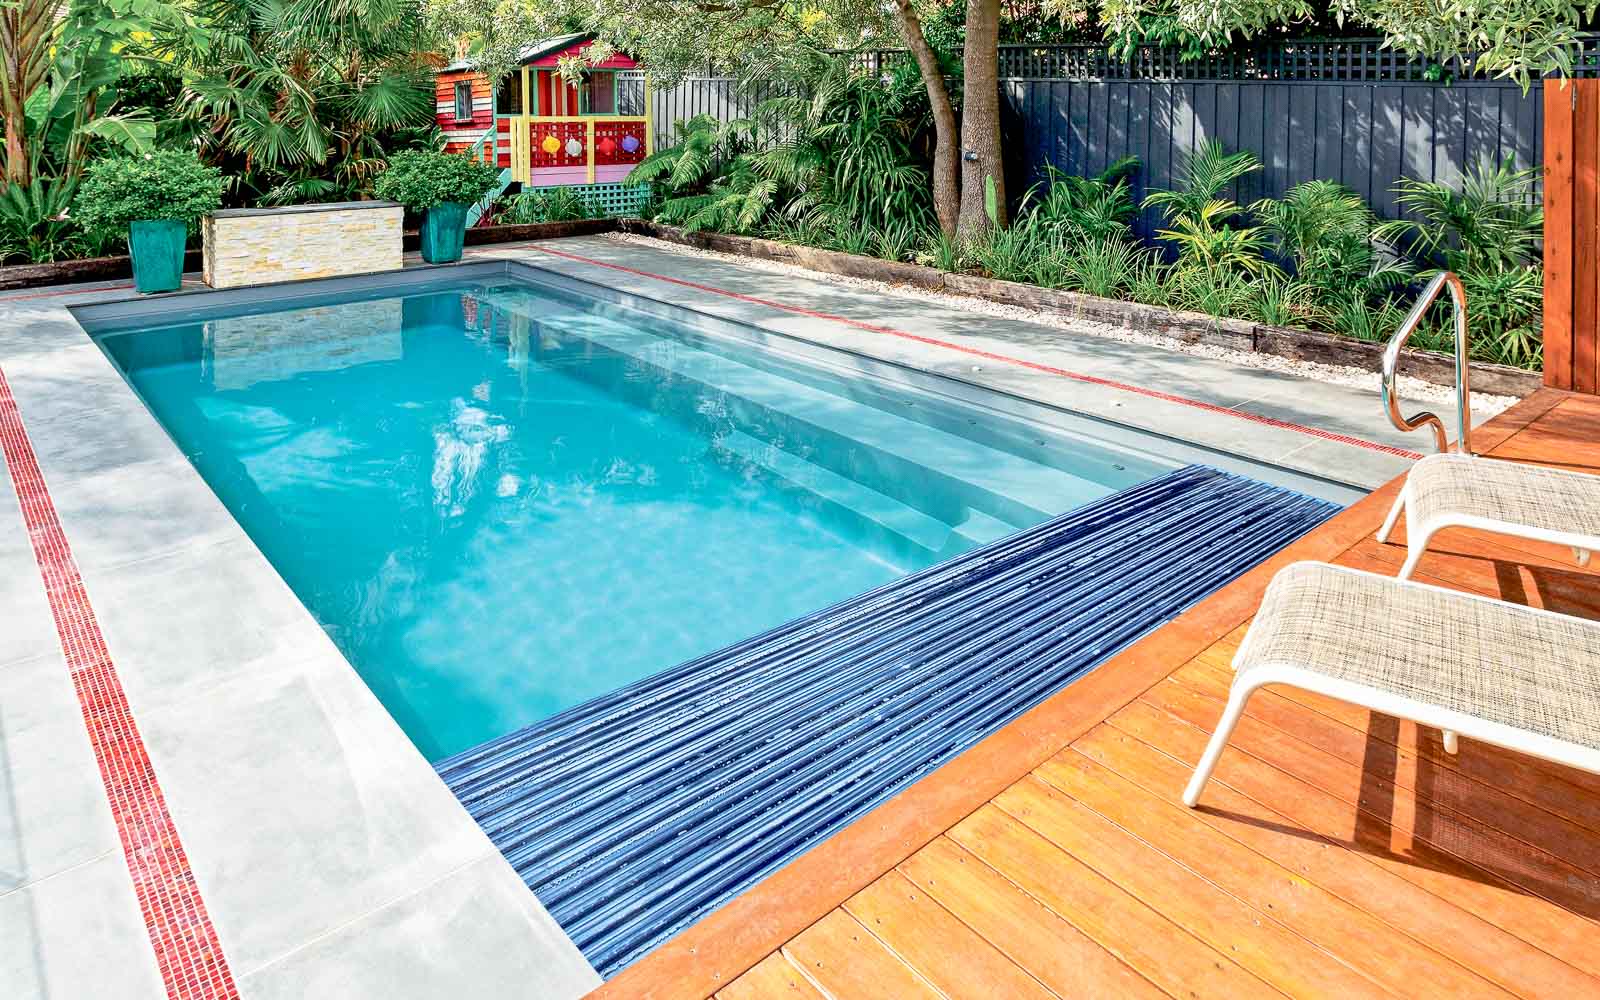 Leisure Pools Reflection plus Cover Box - a fiberglass pool